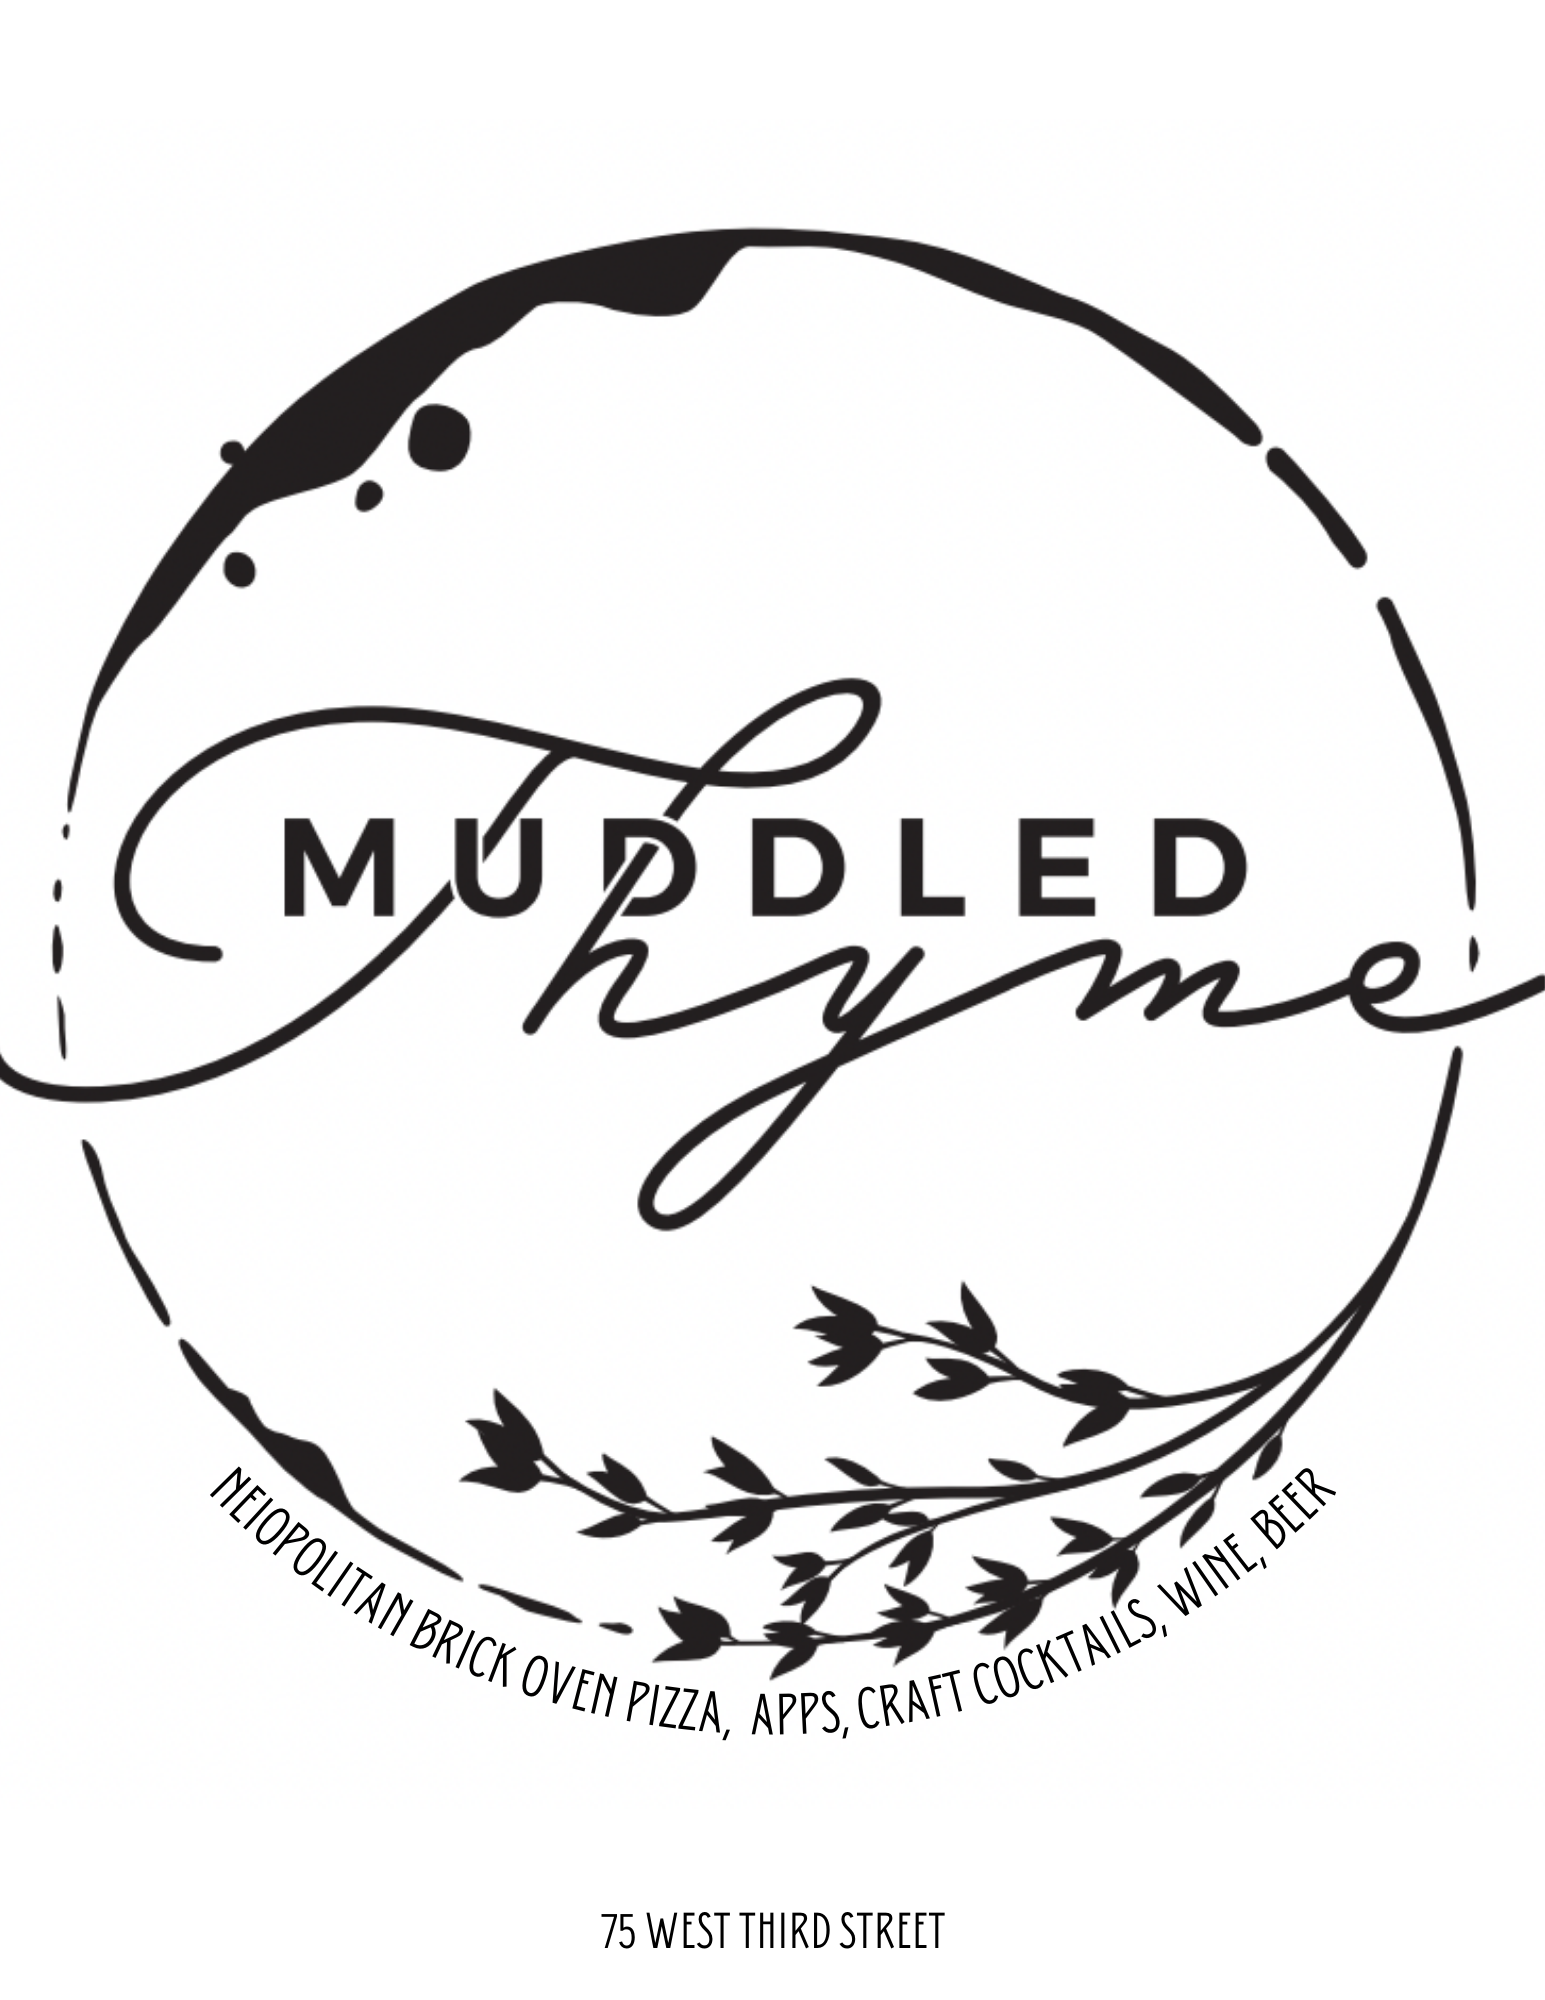 Muddled Thyme